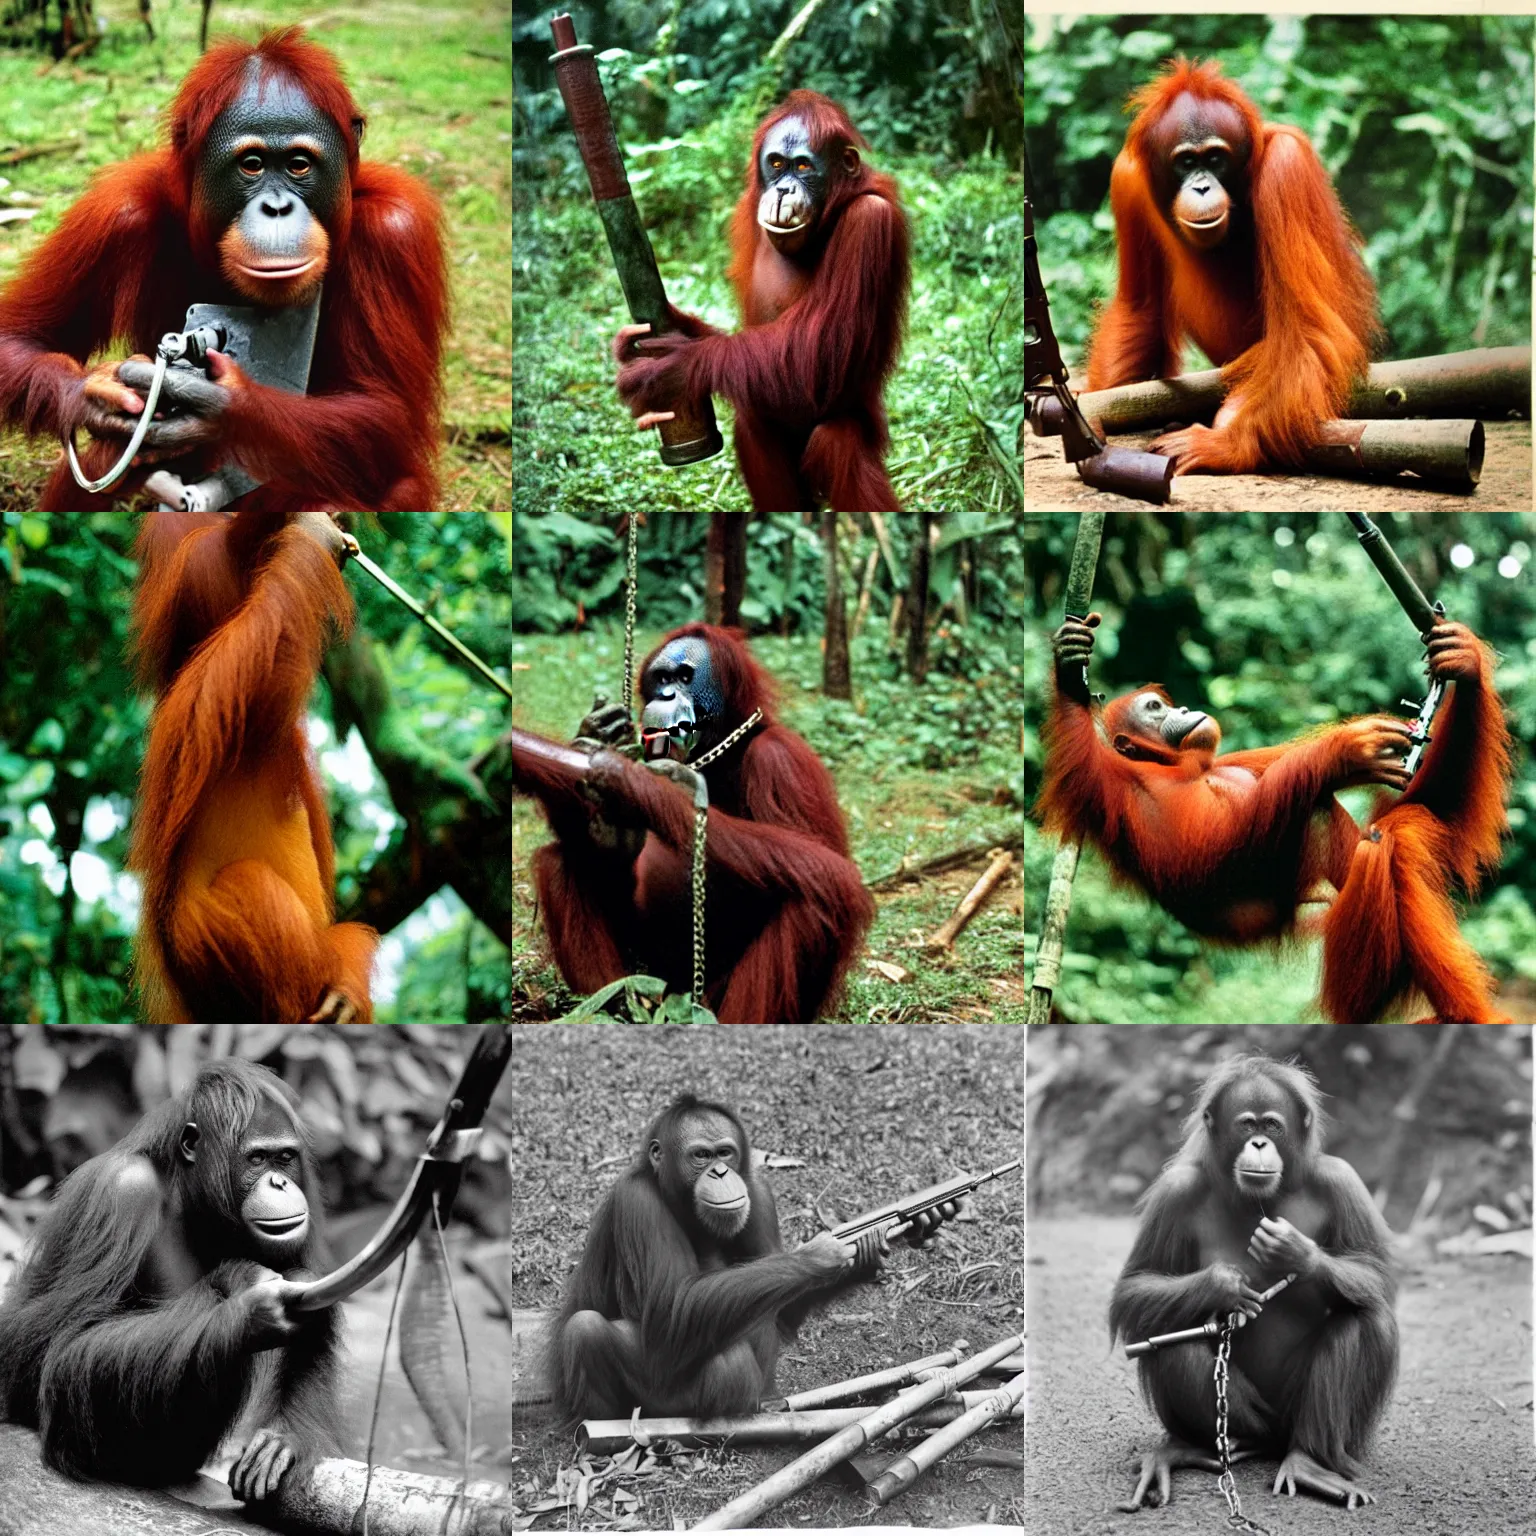 Prompt: photograph of an orangutan holding a chaingun in the vietnam war